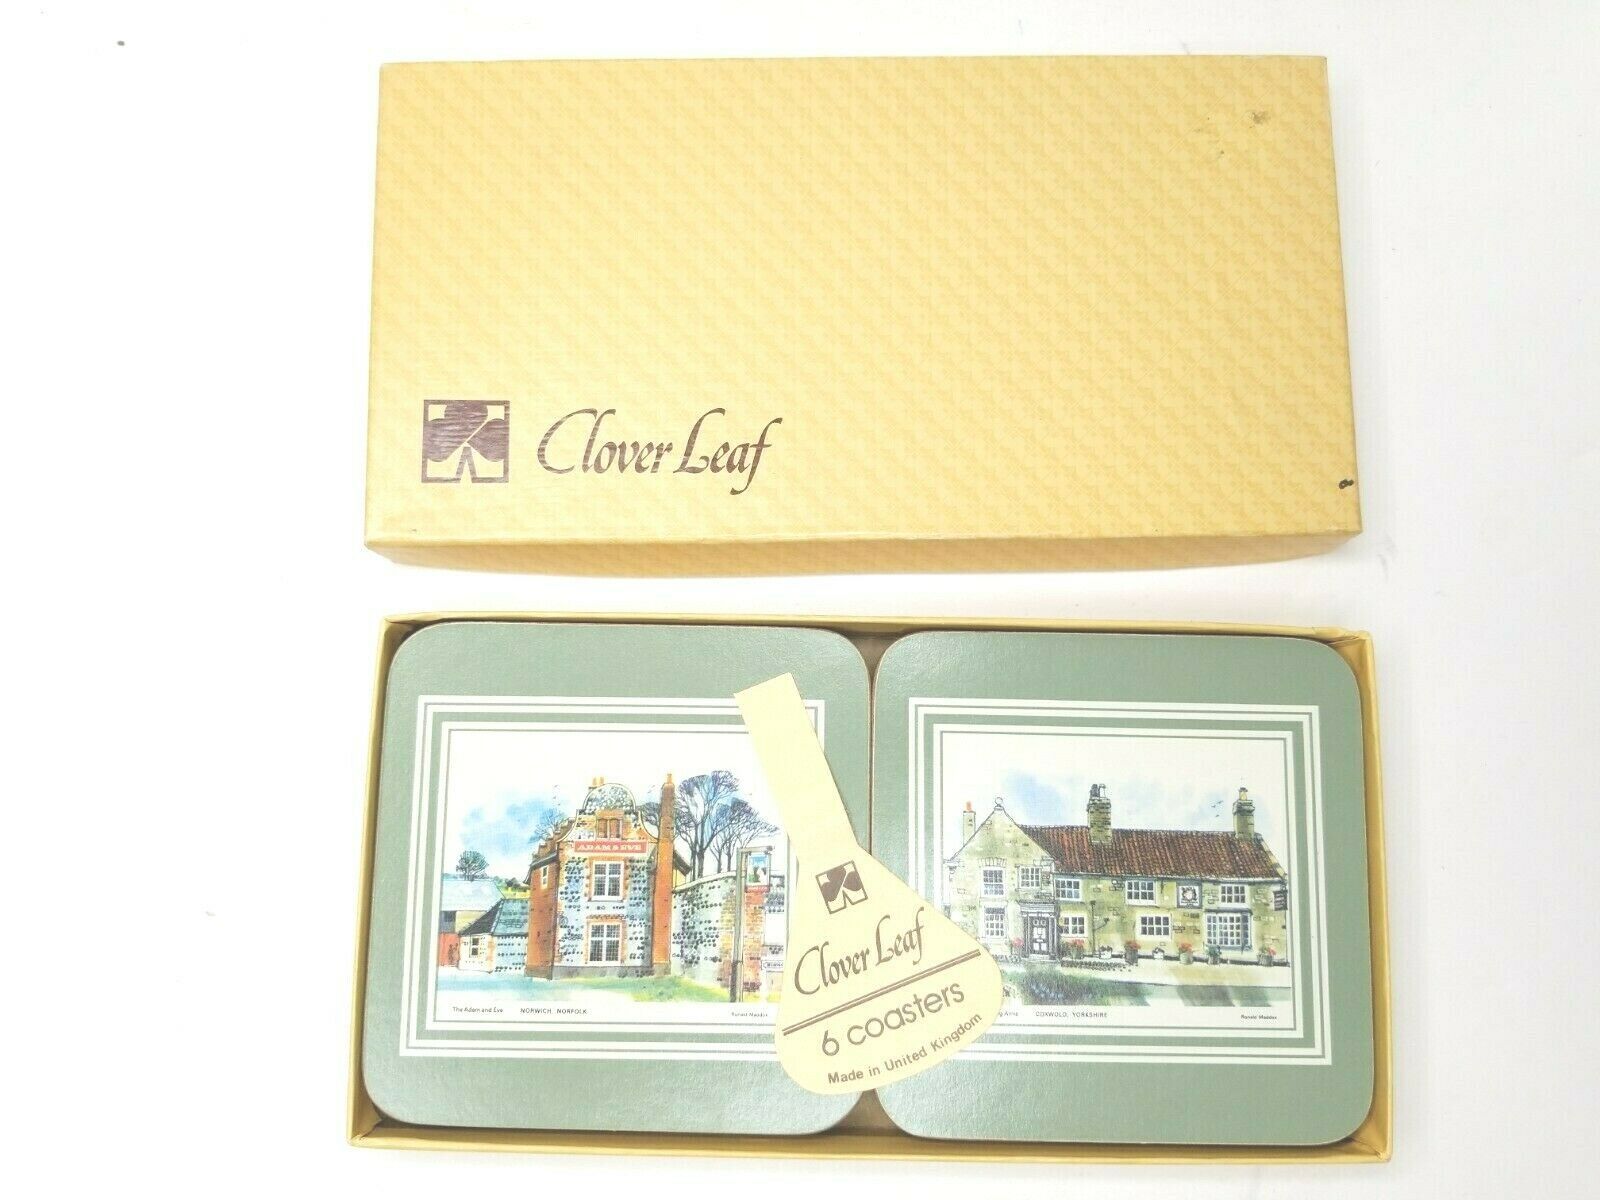 6 VTG Cloverleaf Coasters Ronald Maddox English Manors Landmark Buildings Scenes - $19.77